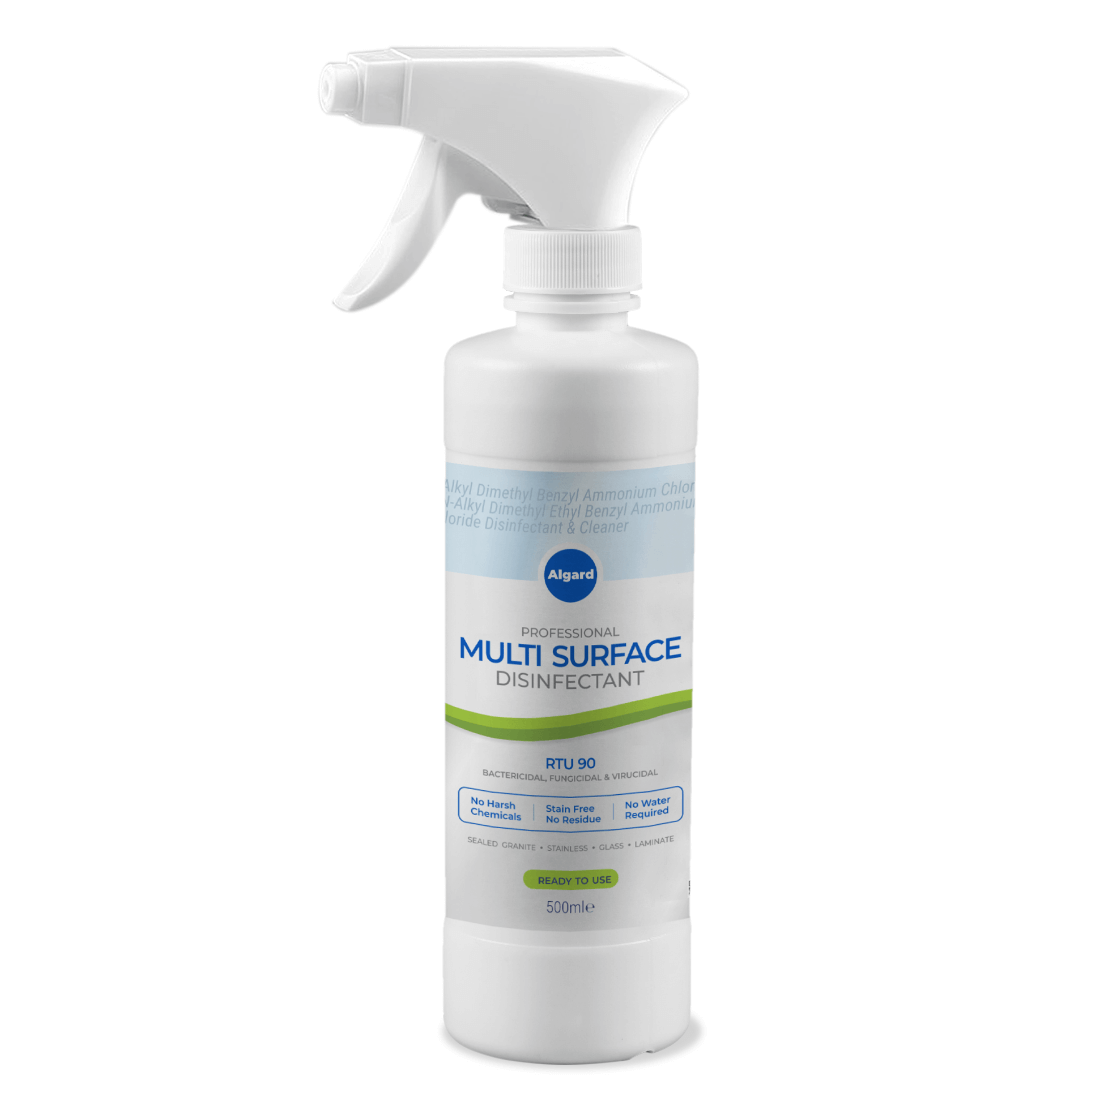 Algard RTU-90 Professional Multi Surface Disinfectant Cleaner – 500 ml